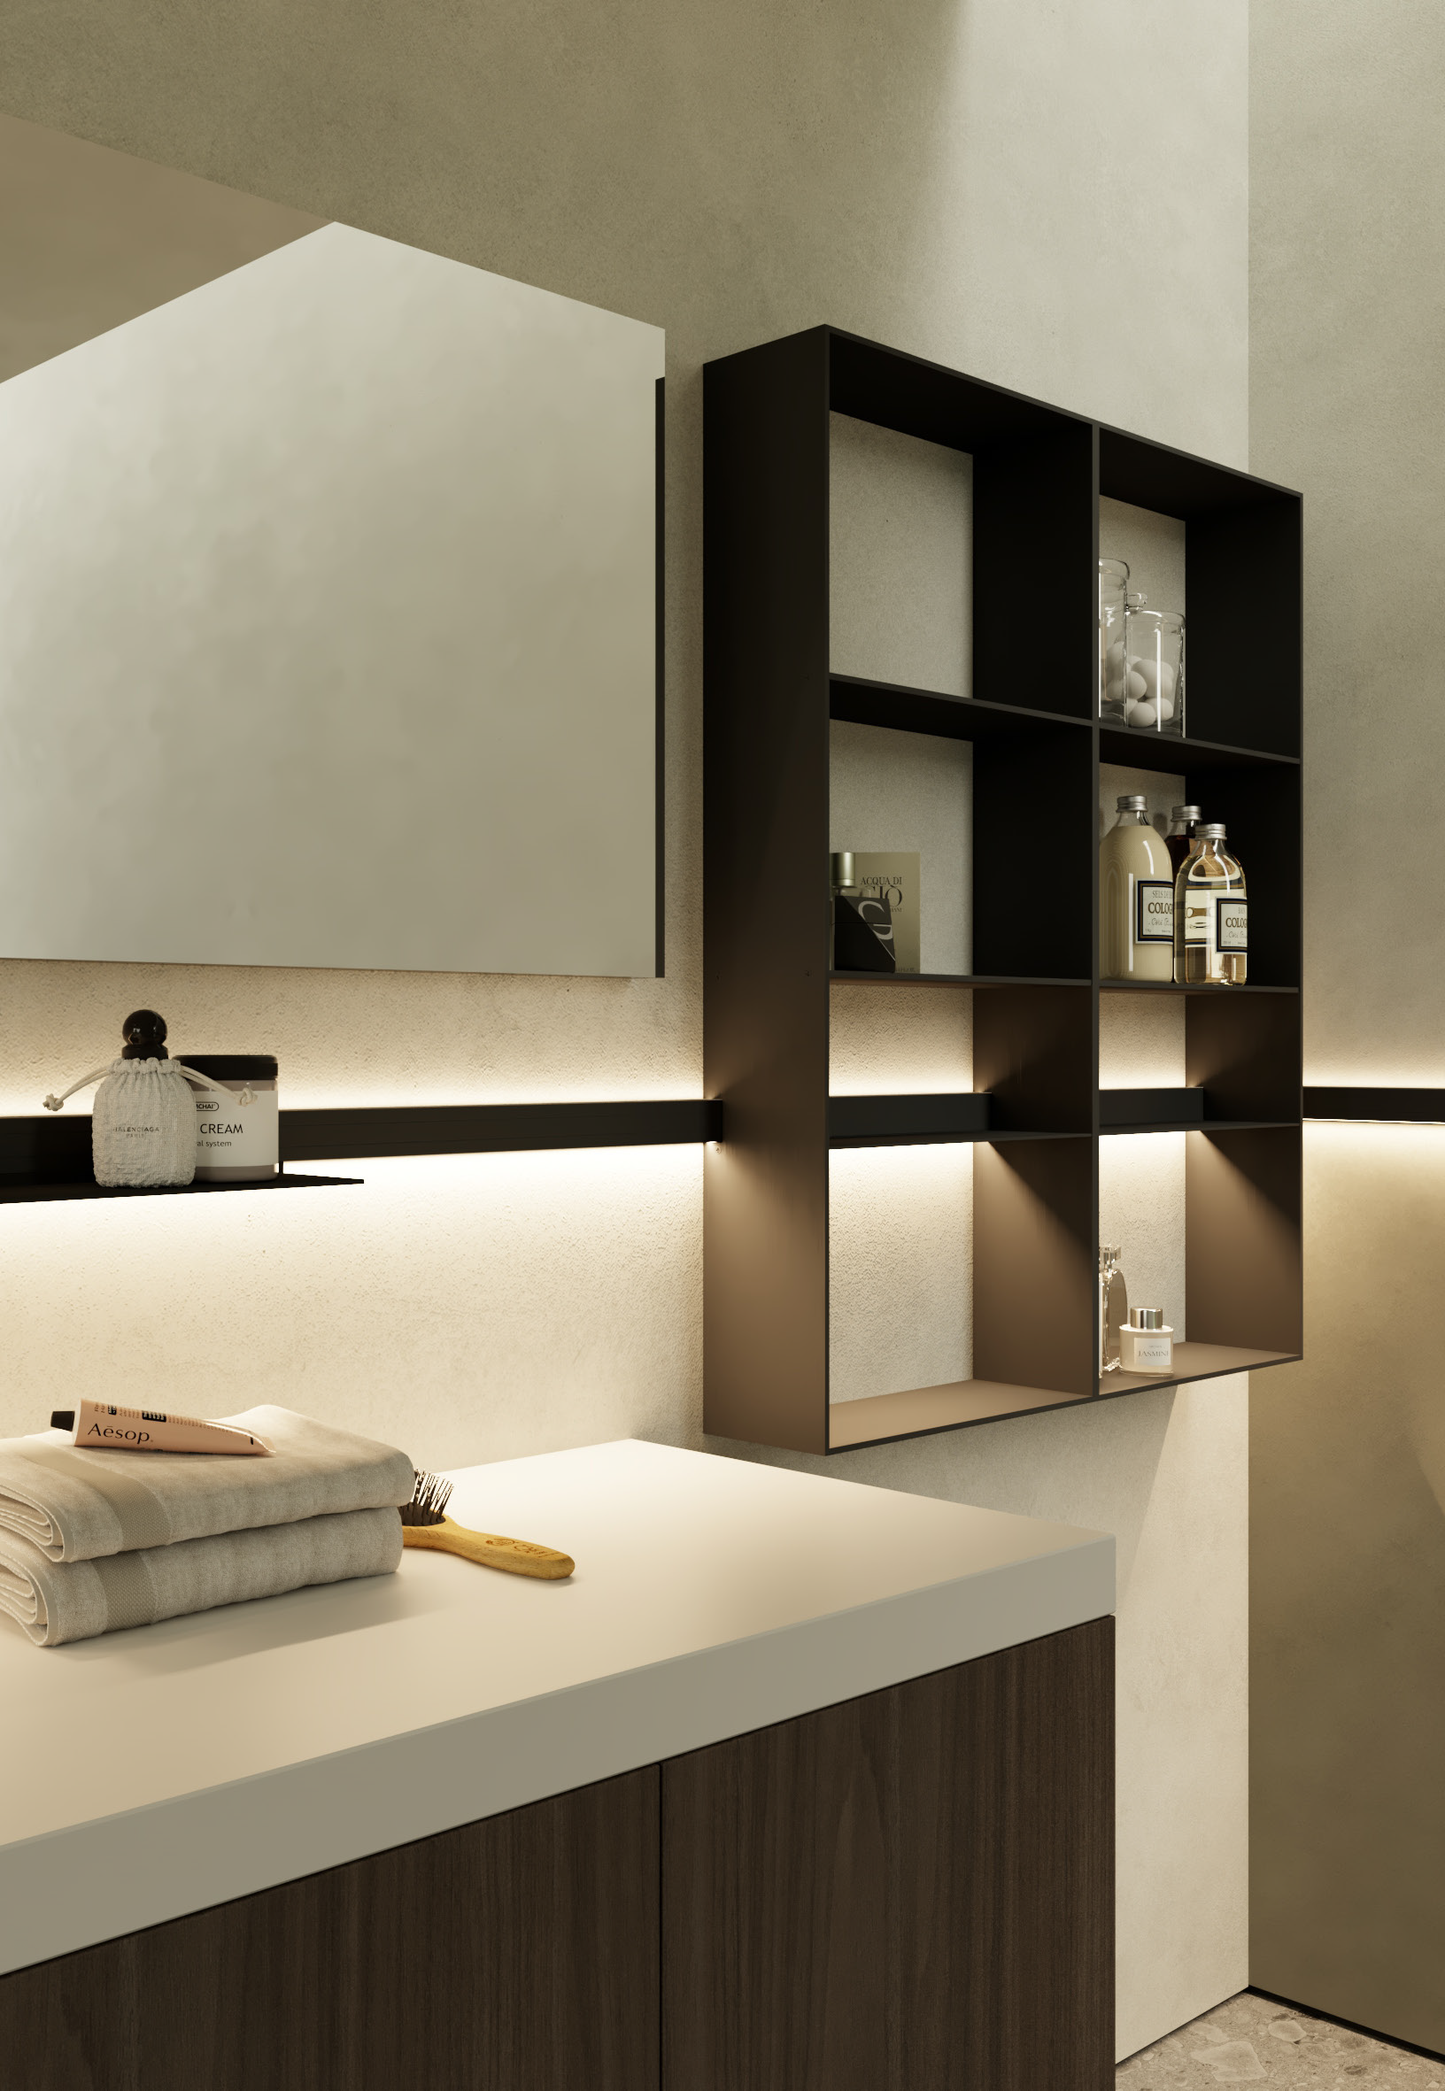 【MADE IN ITALY】Customizable Hanging Shelf System 意大利製 組合式燈光及層架系統